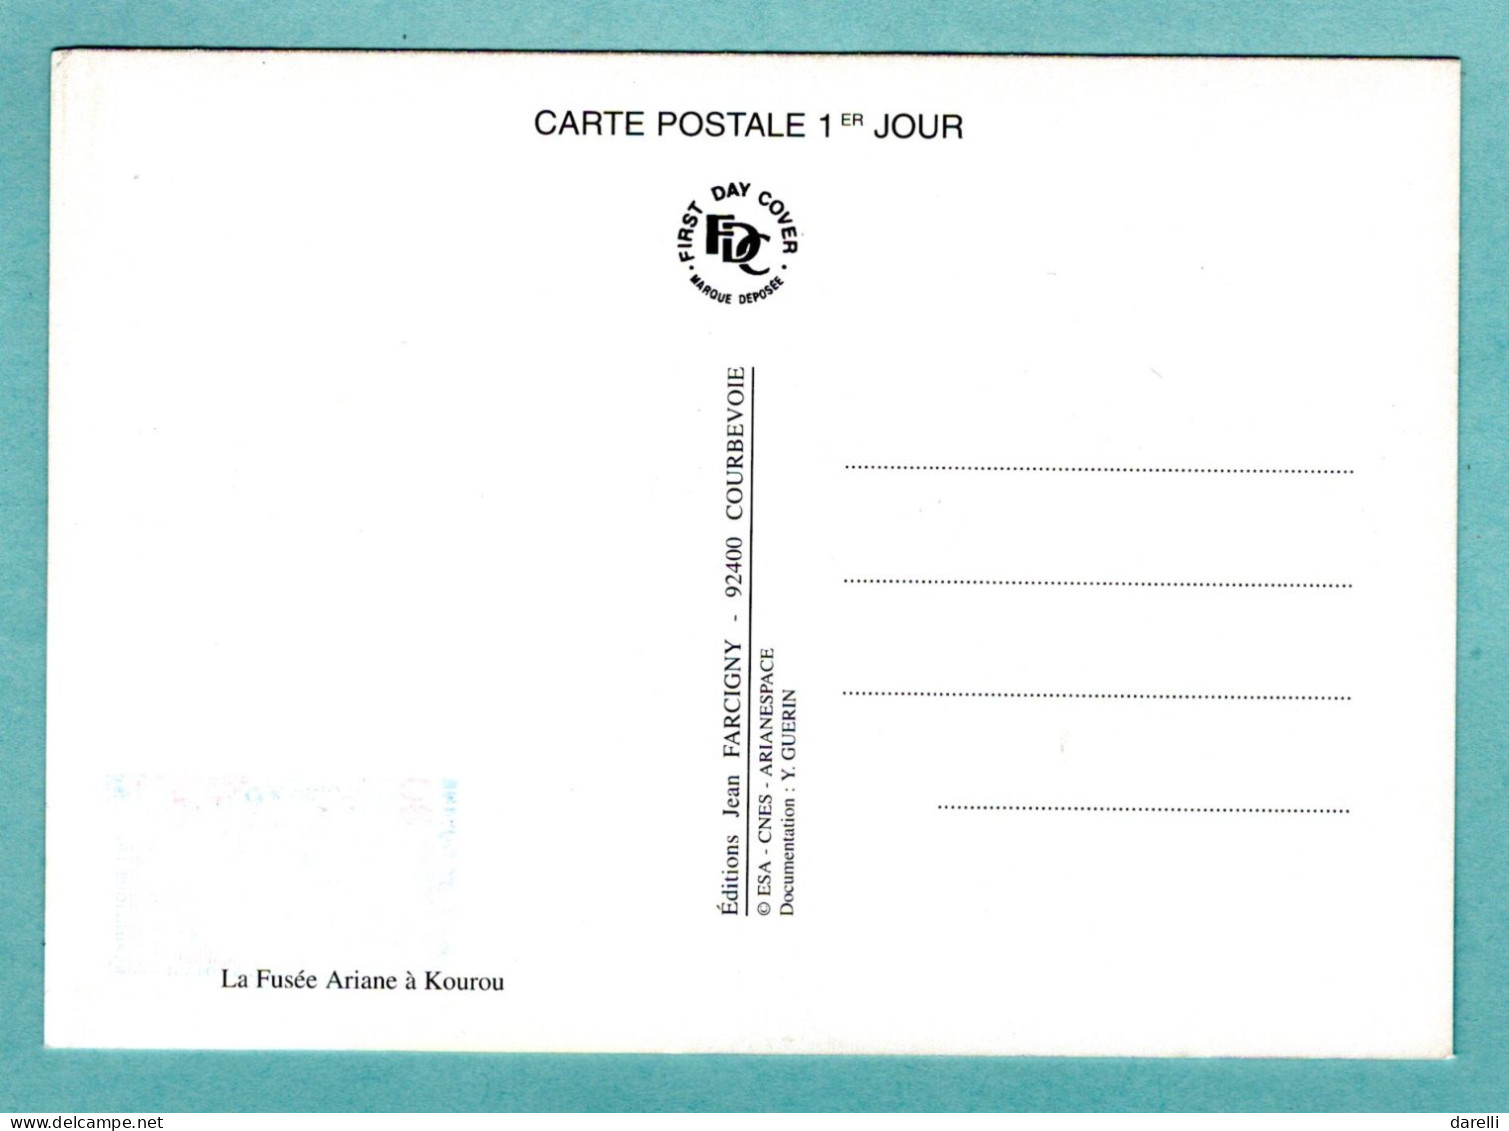 Carte postale espace - Guyane